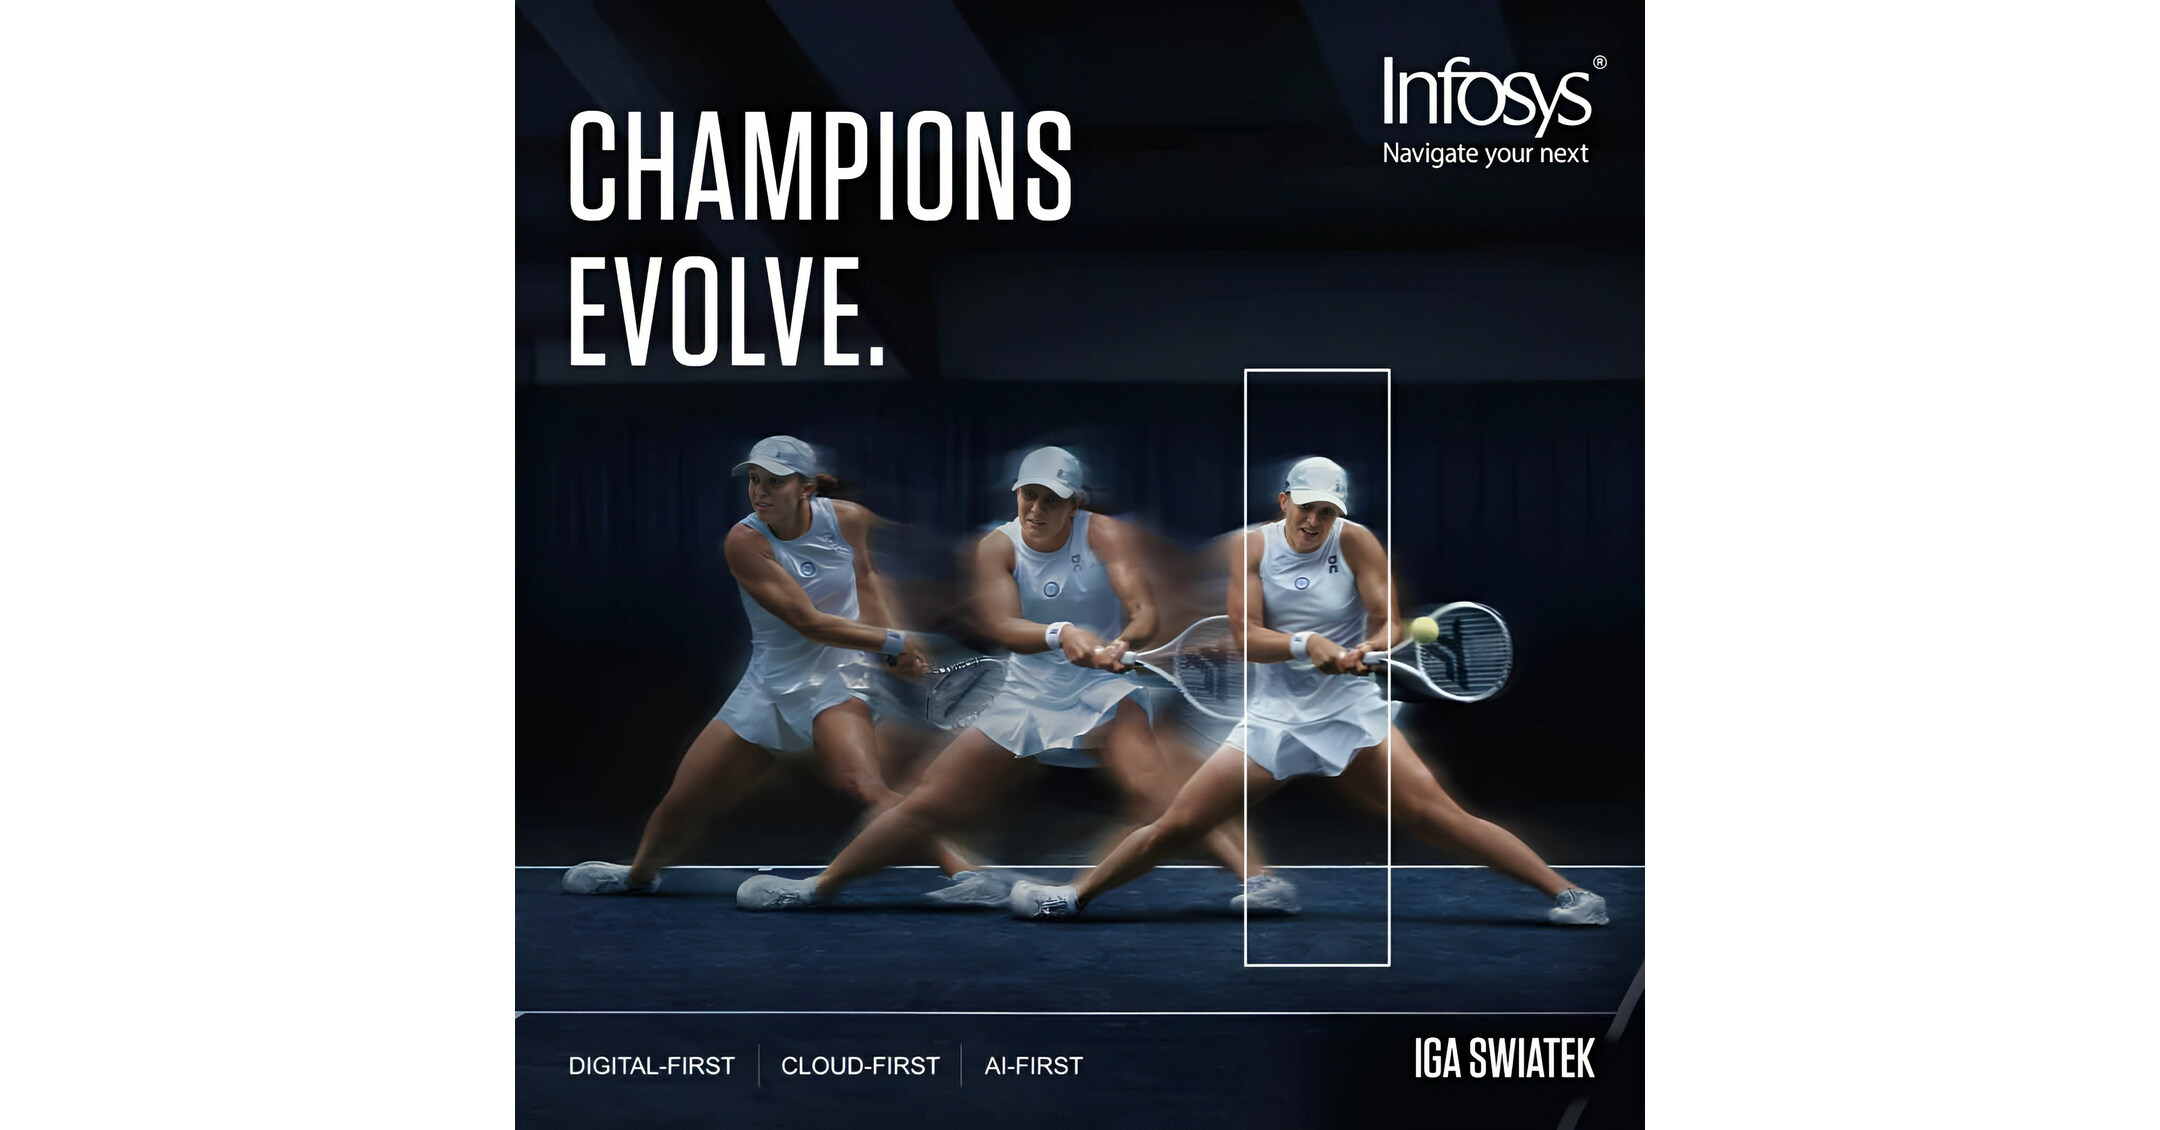 Infosys Welcomes Tennis World No.1 Iga Świątek as Global Brand Ambassador to Promote Infosys’ Digital Innovation and Inspire Women Around the World